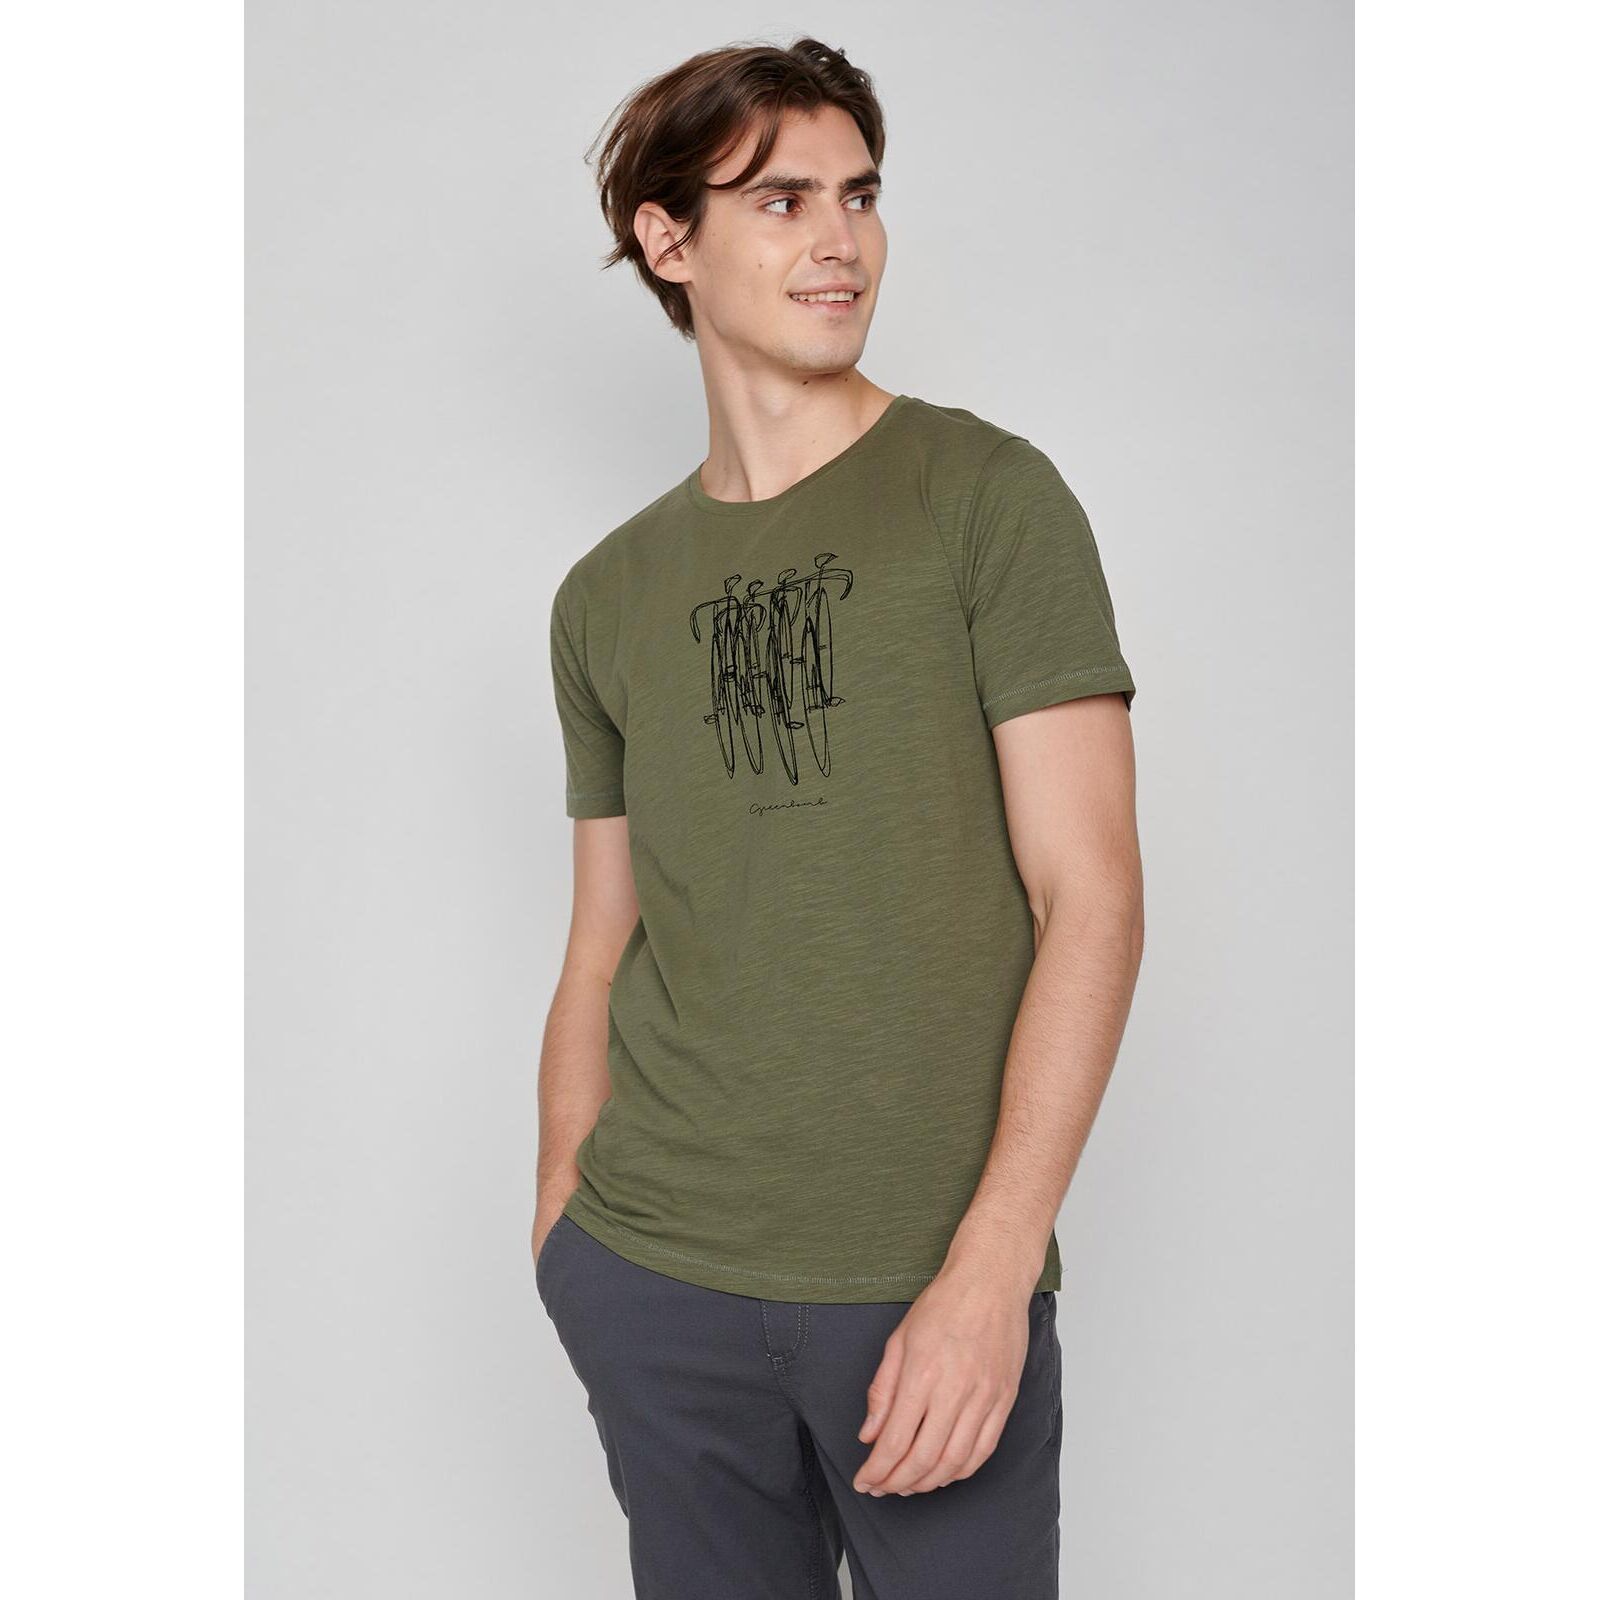 T-Shirt Spice Bike Sketch in dirty olive von GREENBOMB